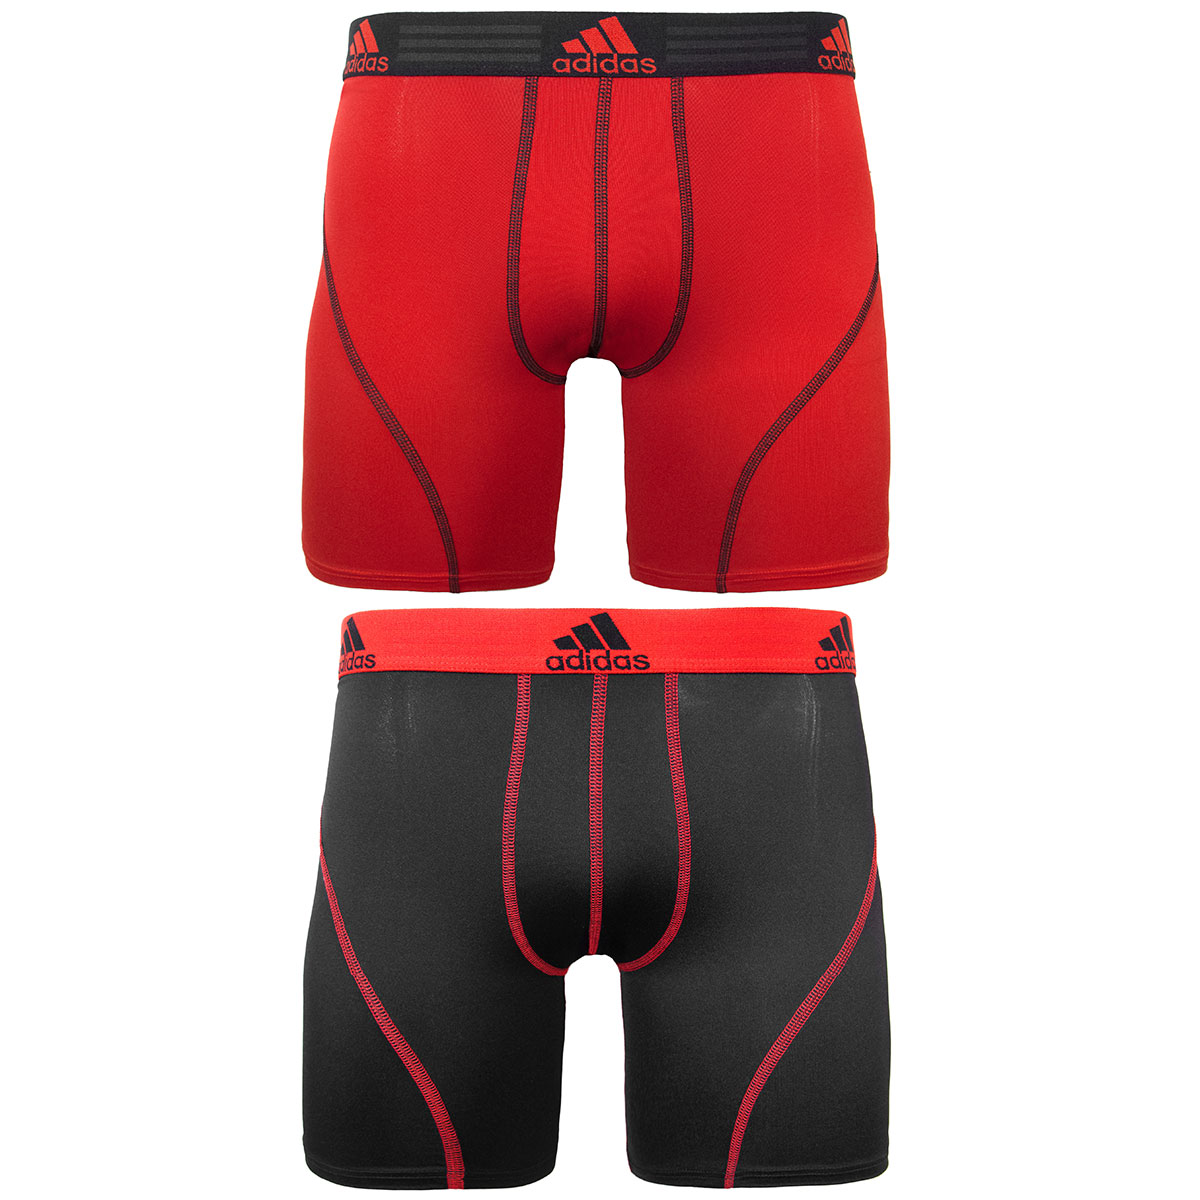 Adidas Men's Climalite Sport Performance Boxer Briefs, Black